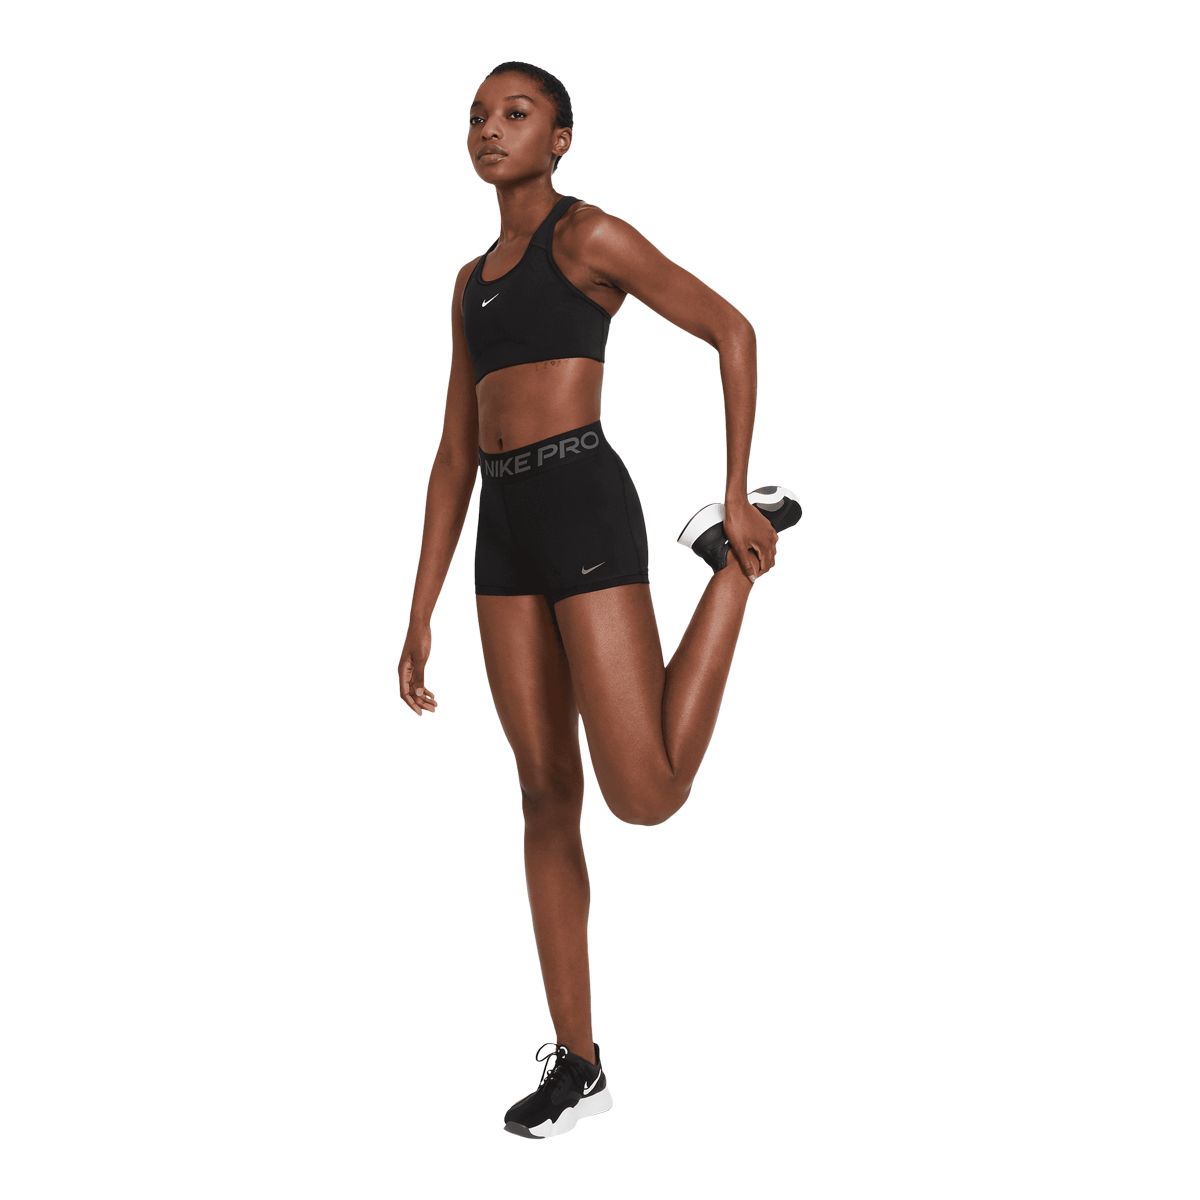 Nike Training Pro 365 3inch shorts in gray & black